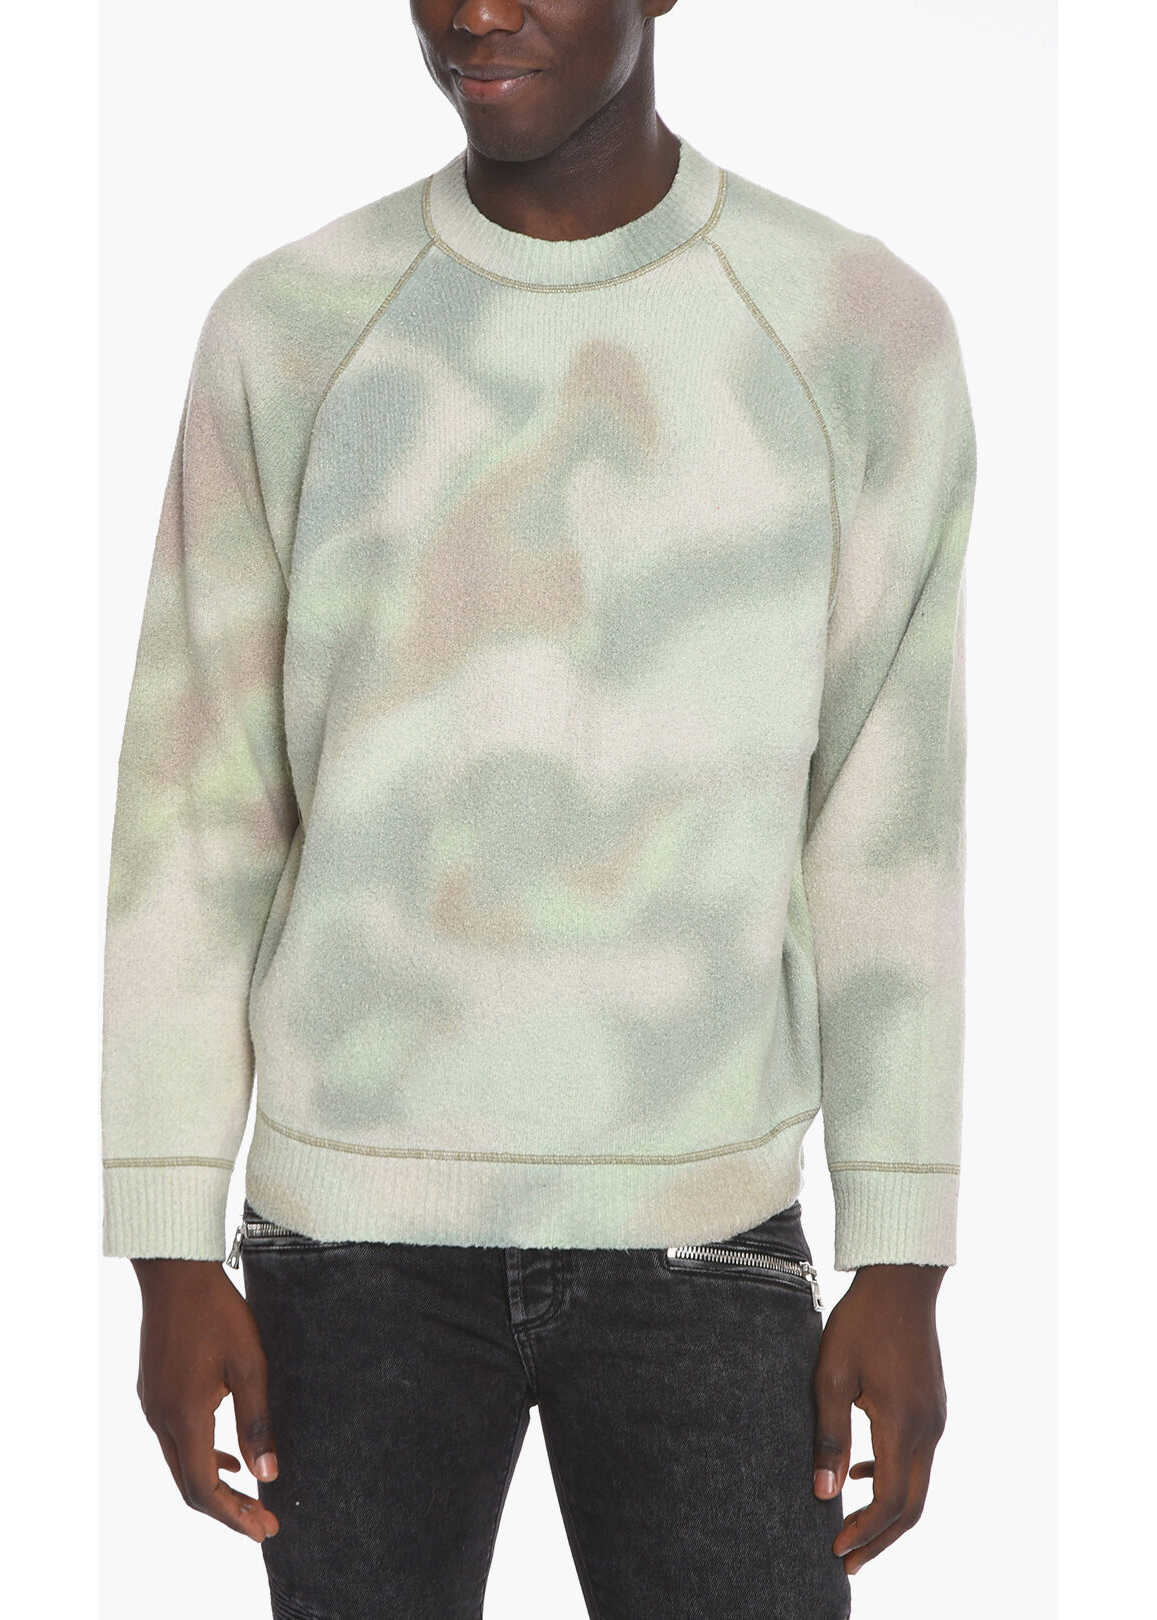 Kenzo Crewneck Sweater With Tye-Dye Print Green